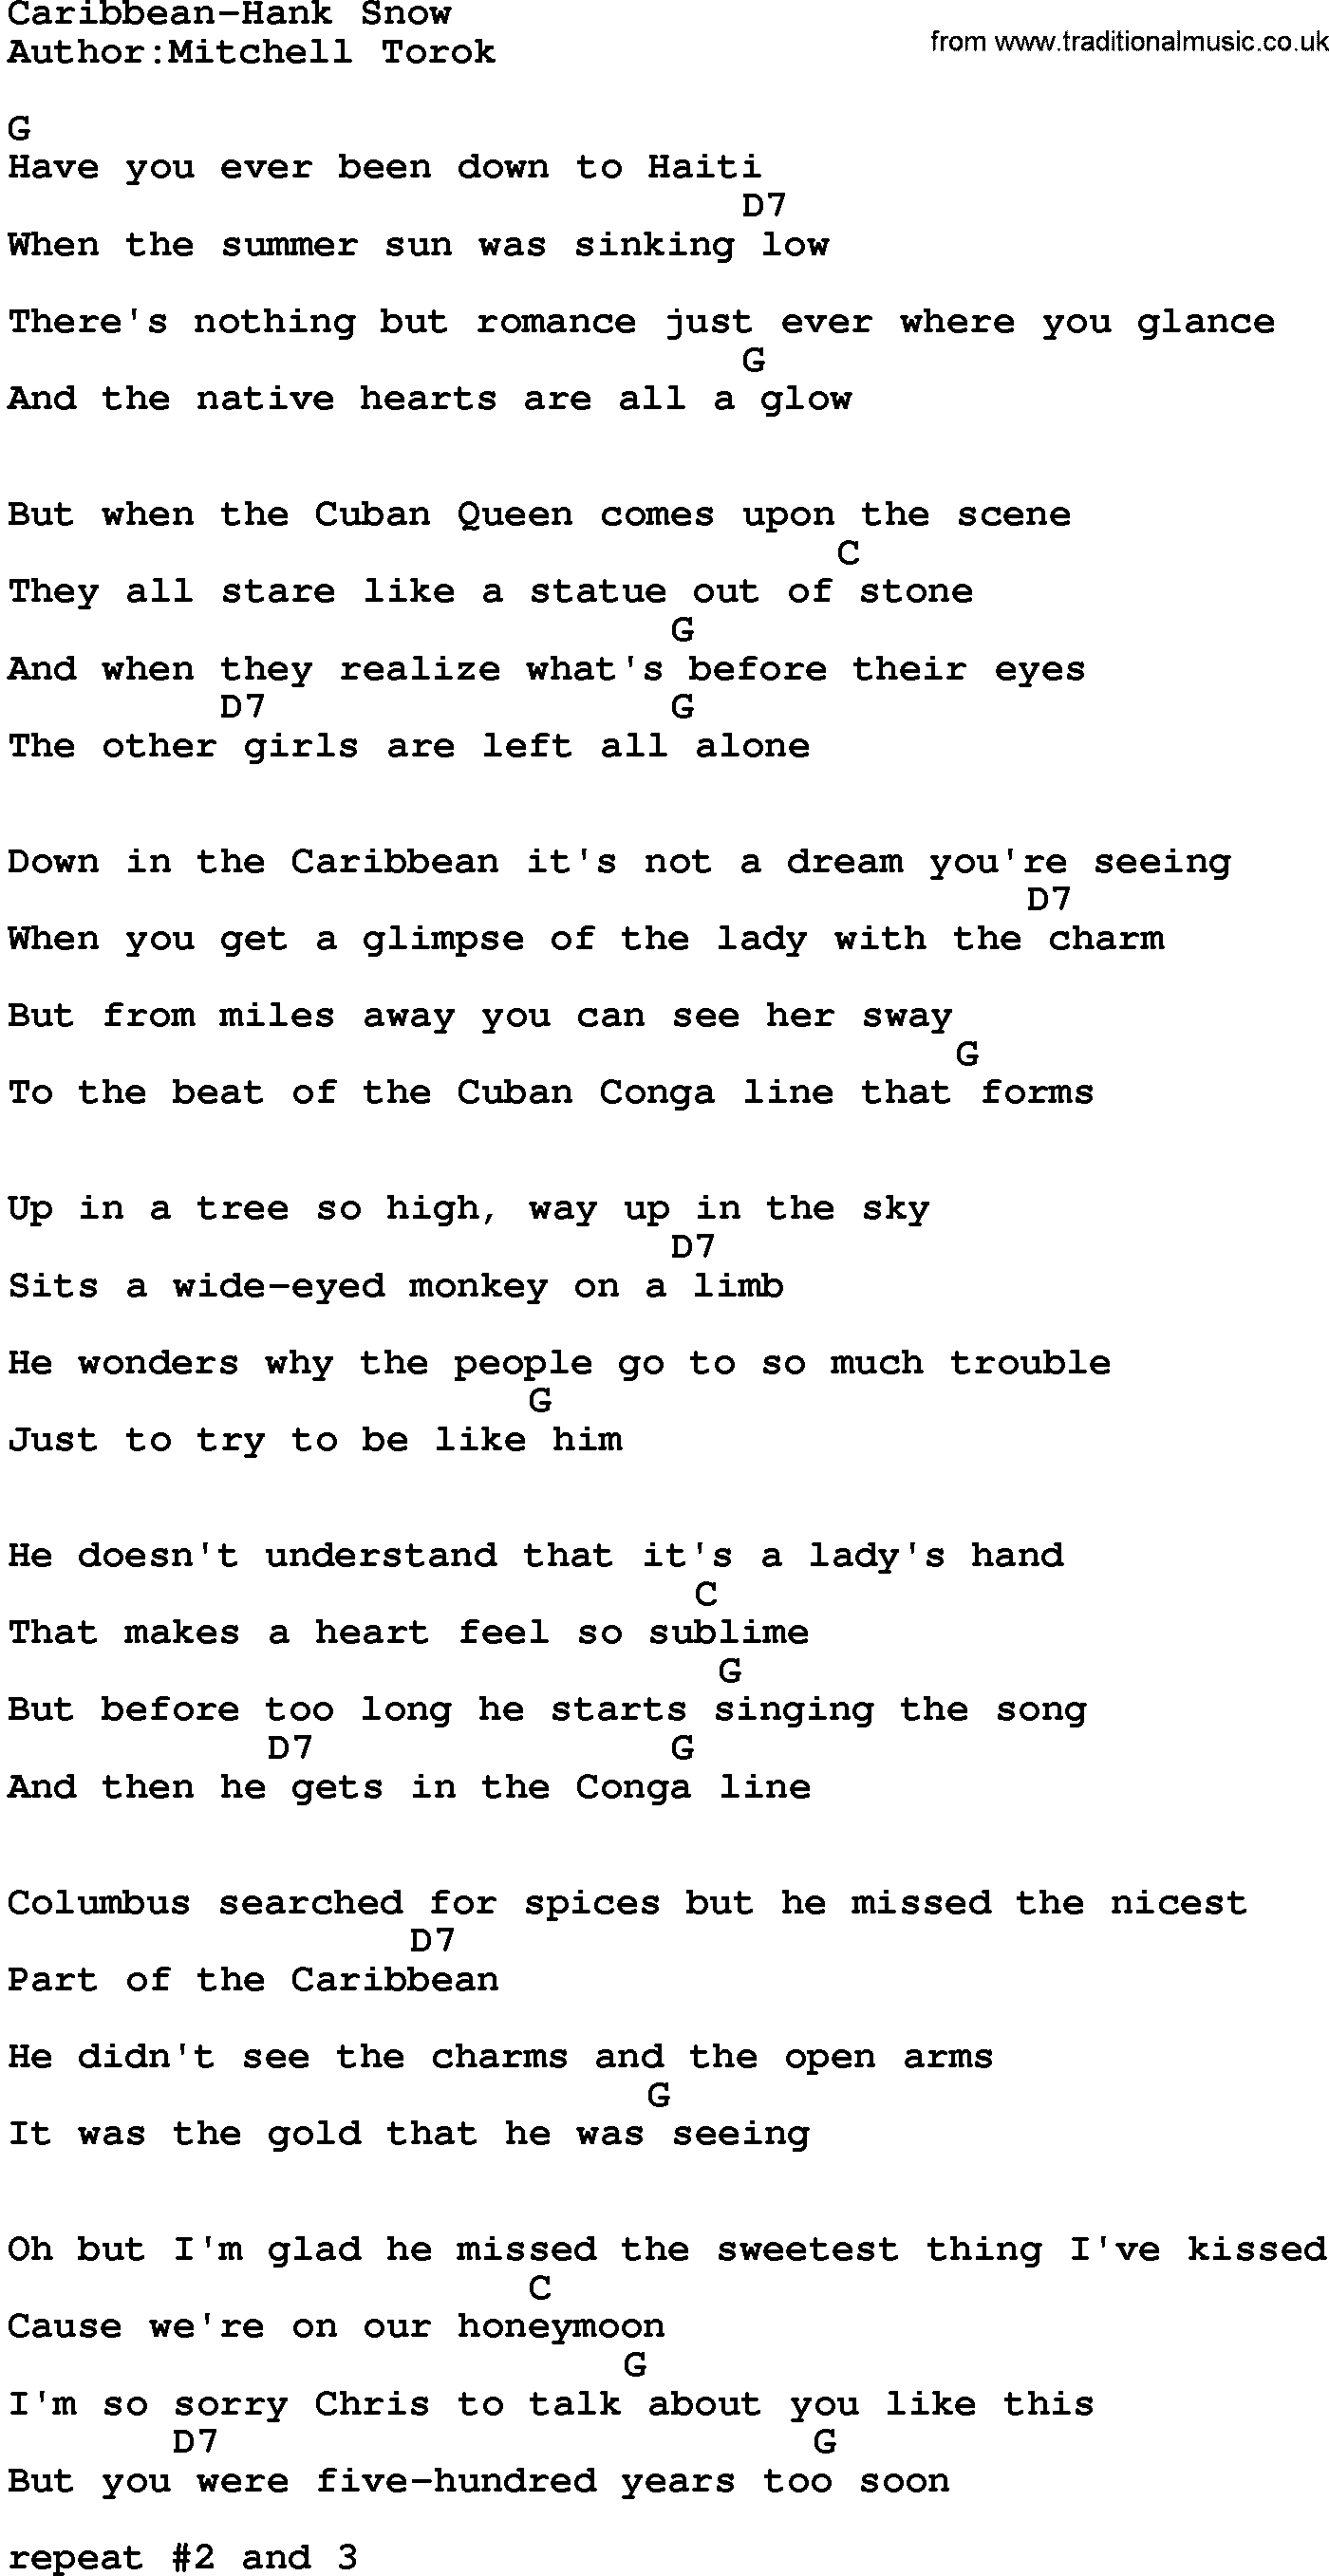 Country music song: Caribbean-Hank Snow lyrics and chords